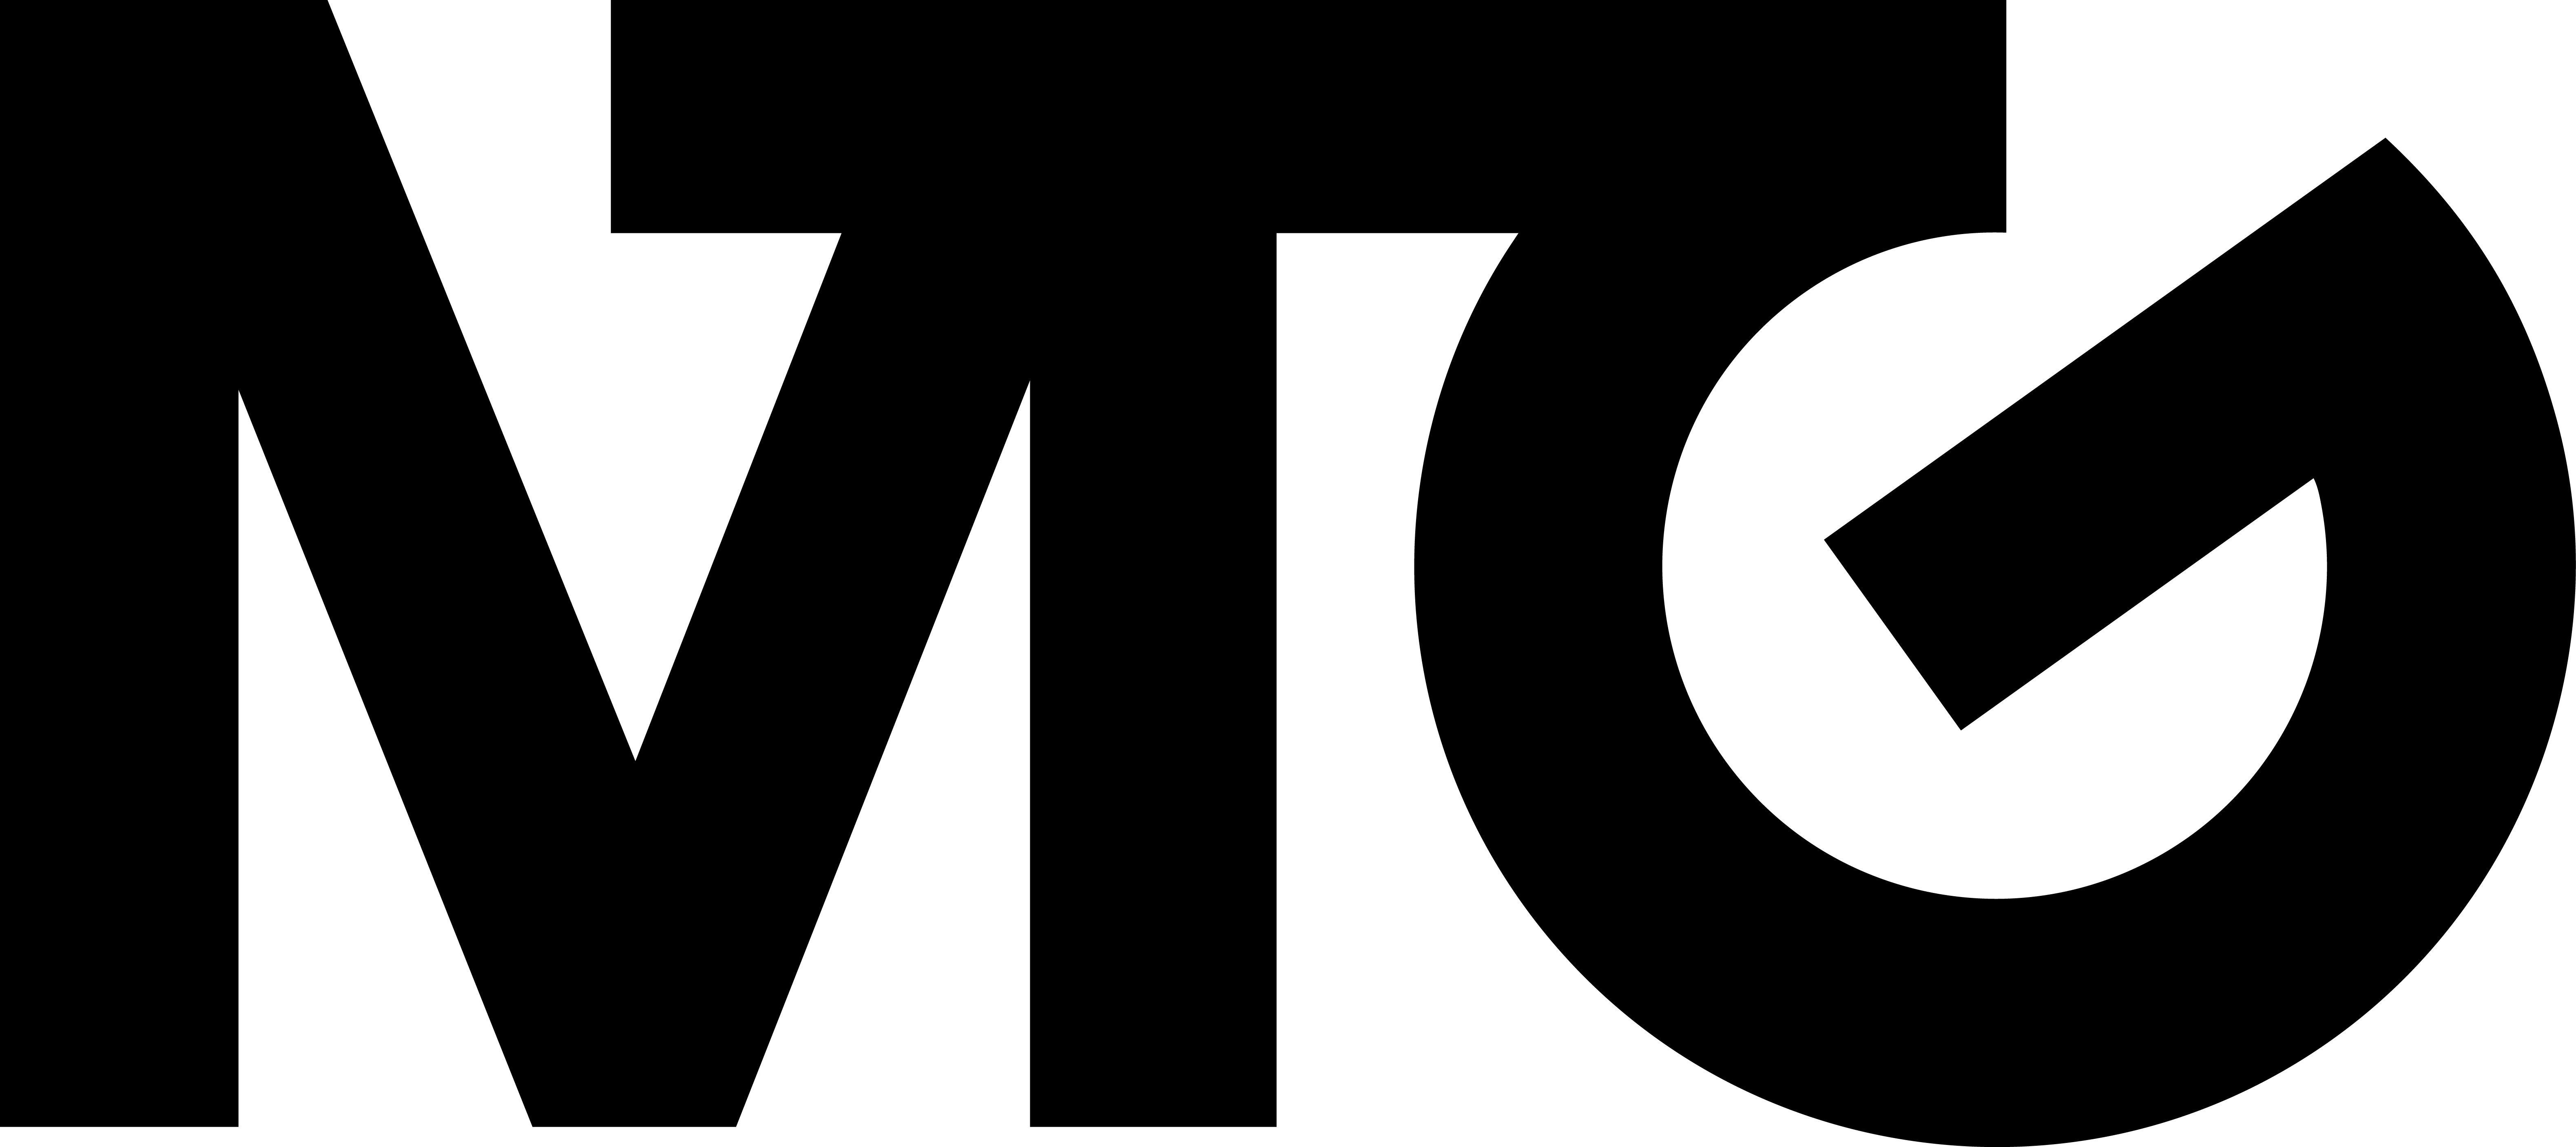 MTG Logo - MTG Logo Full Size Black - JPG | MTG